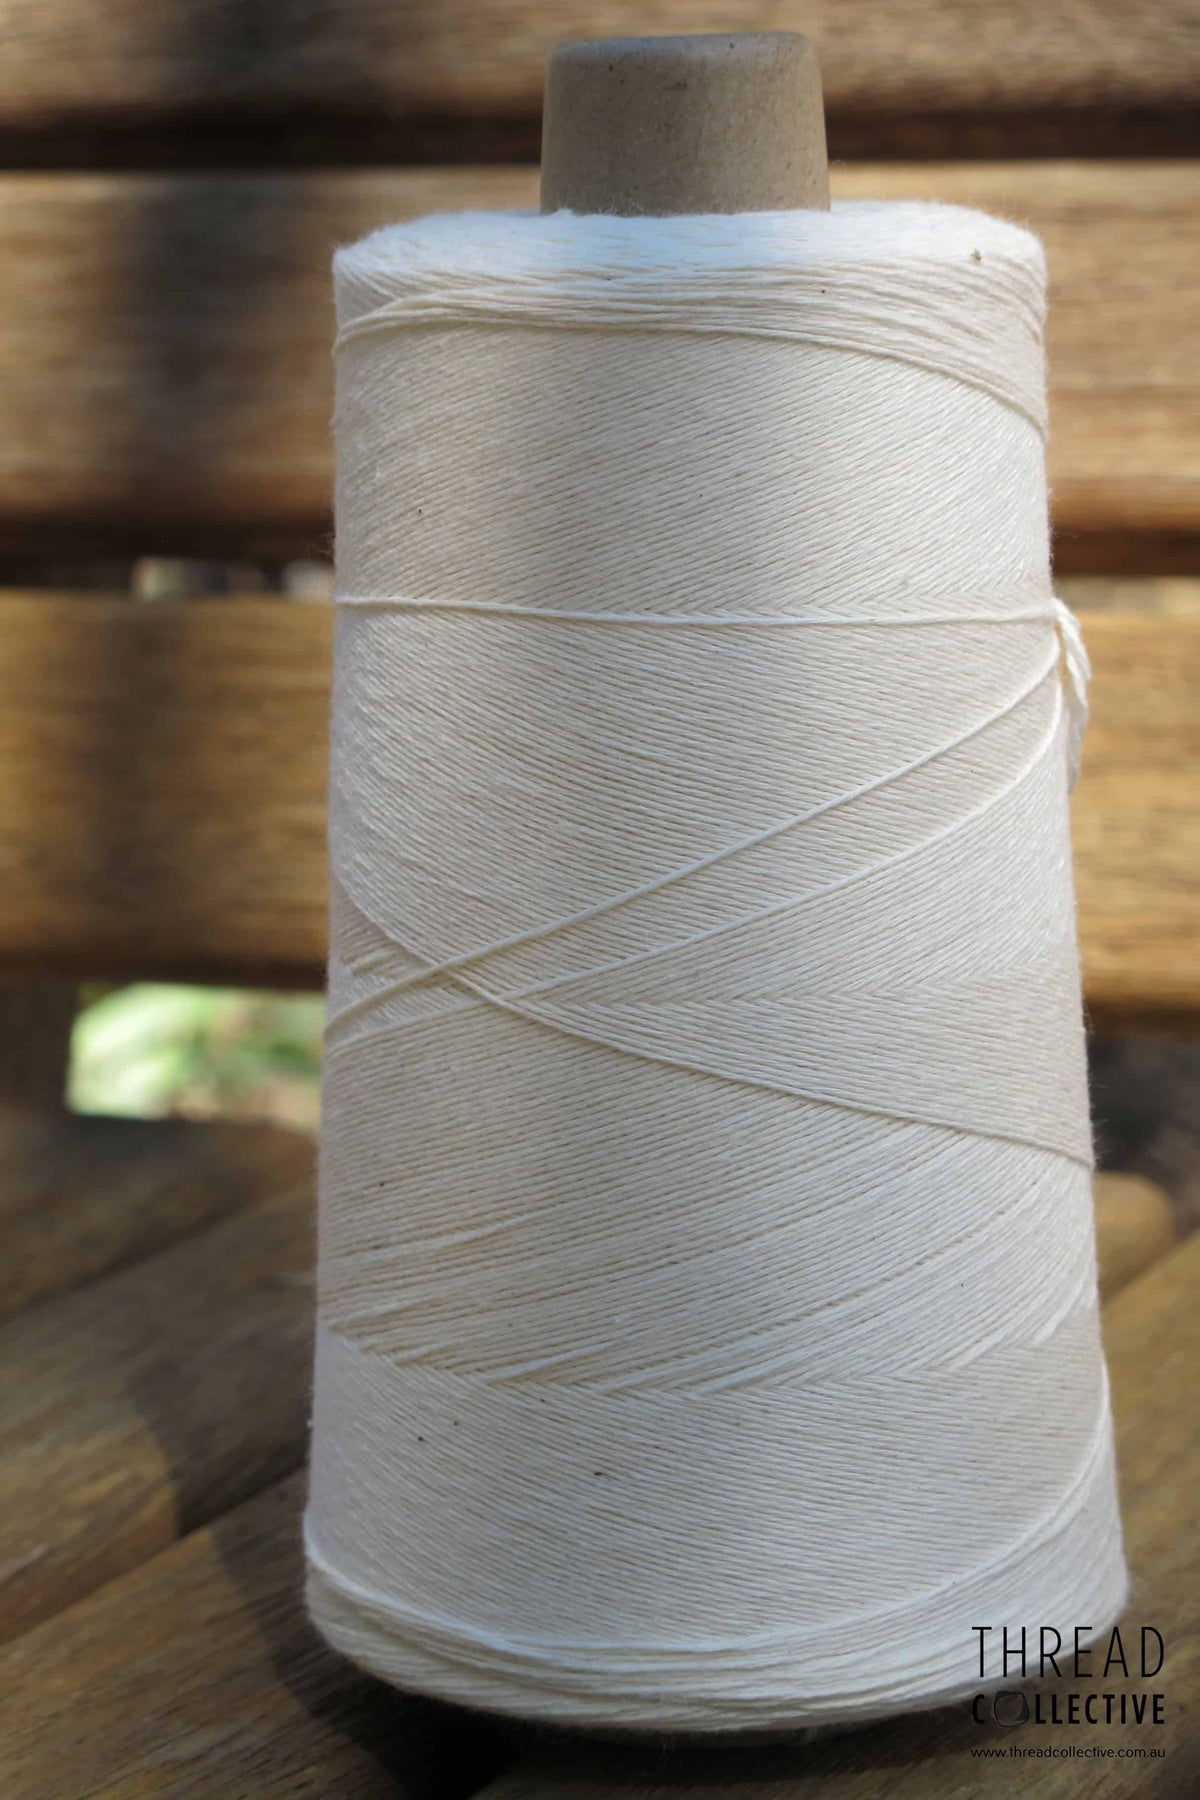 Australian 100% Super Cotton, Yarn, Full Circle Fibres,- Weaving, Thread Collective, Brisbane, Australia